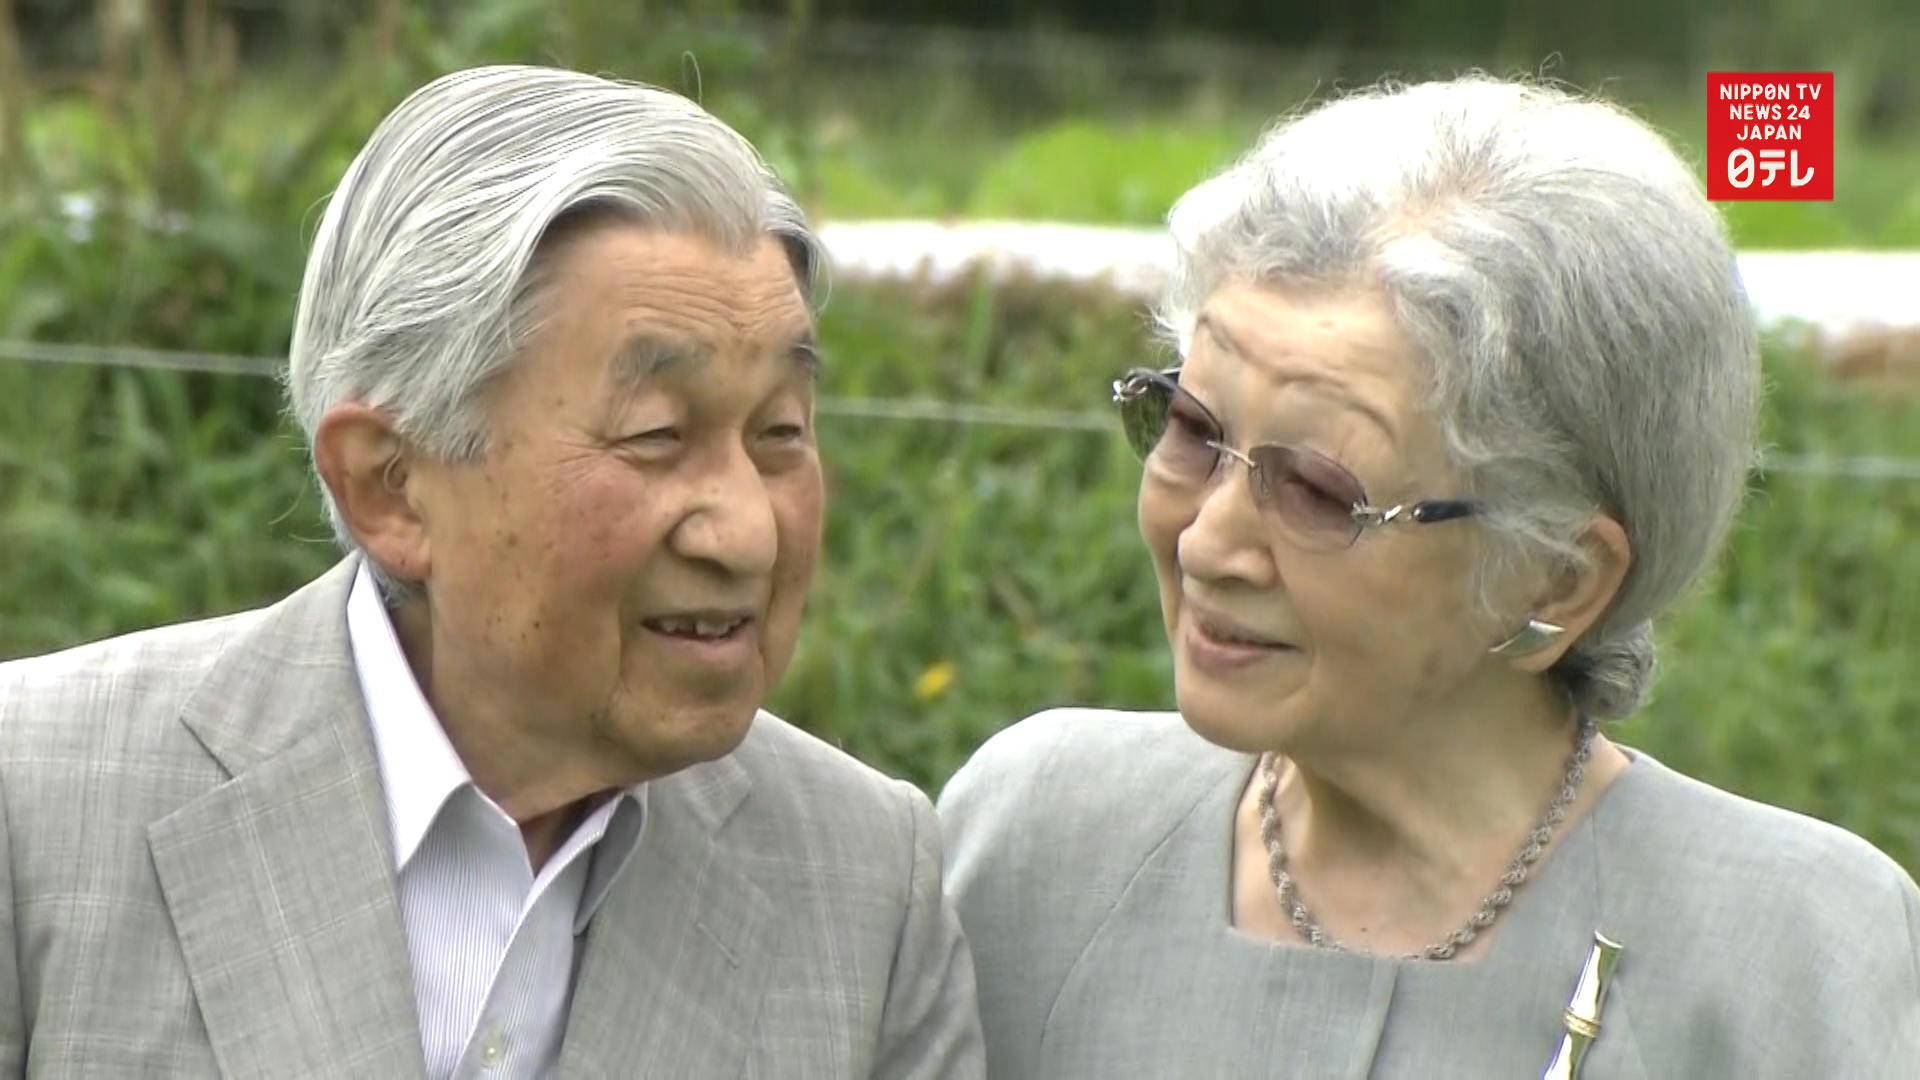 Emperor Emeritus Akihito and Empress Emerita Michiko enjoy vacation in Nagano